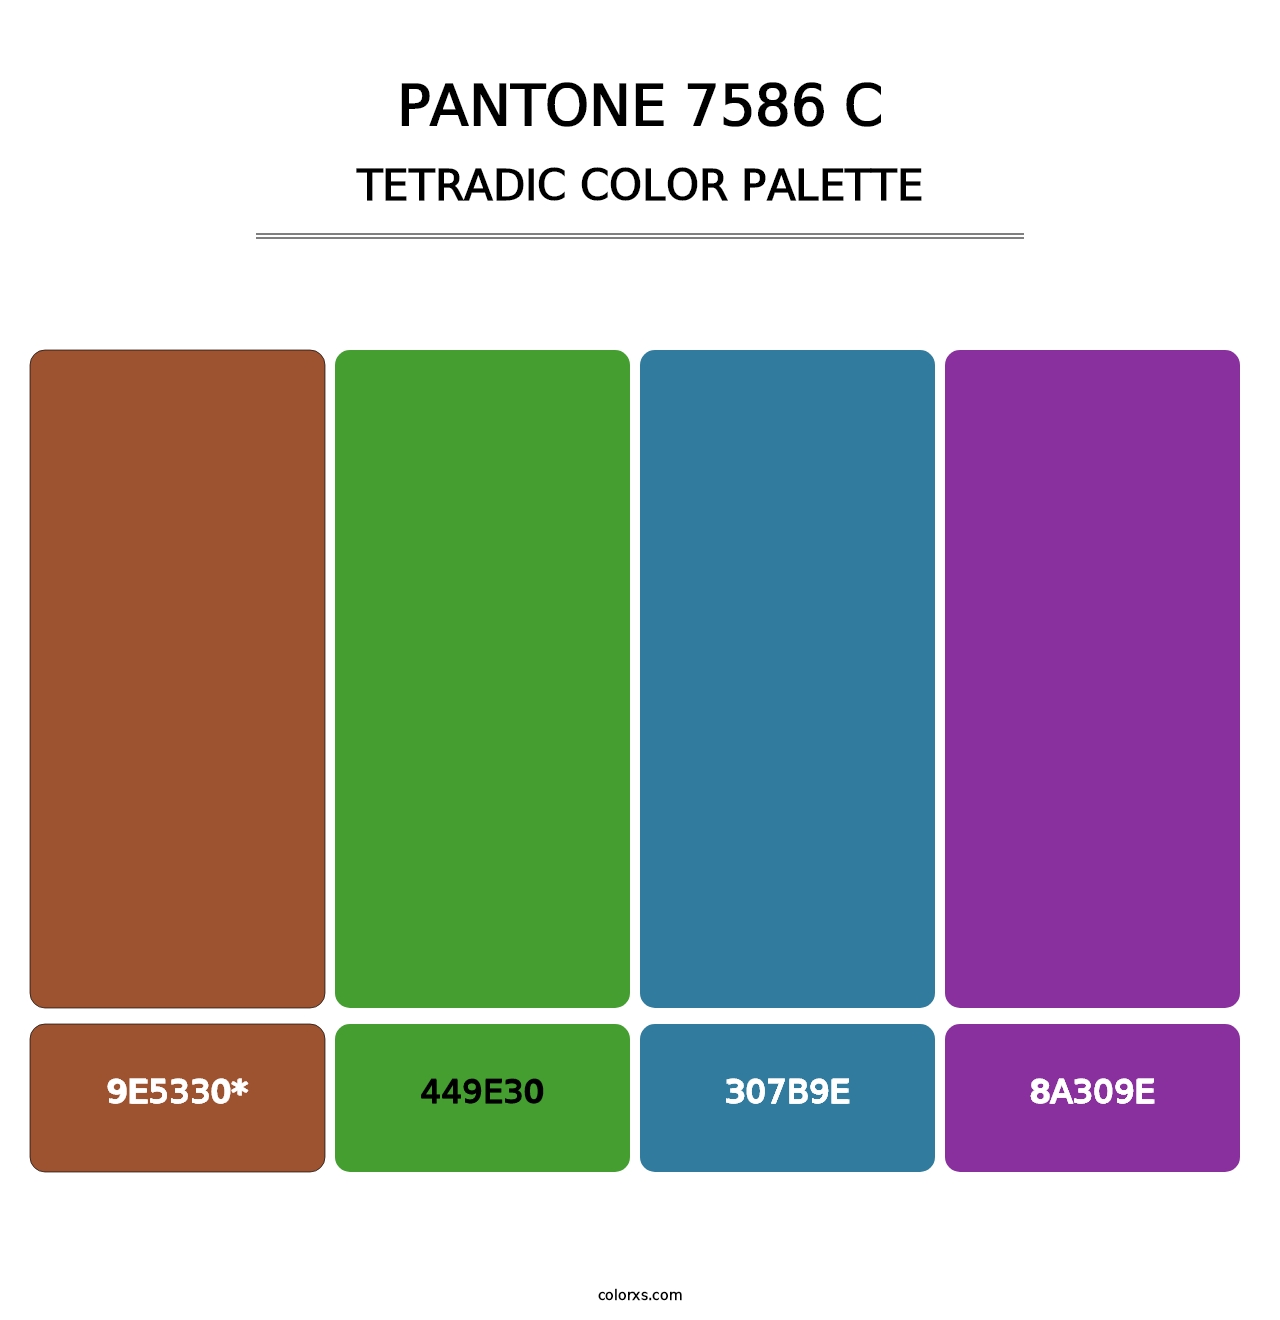 PANTONE 7586 C - Tetradic Color Palette